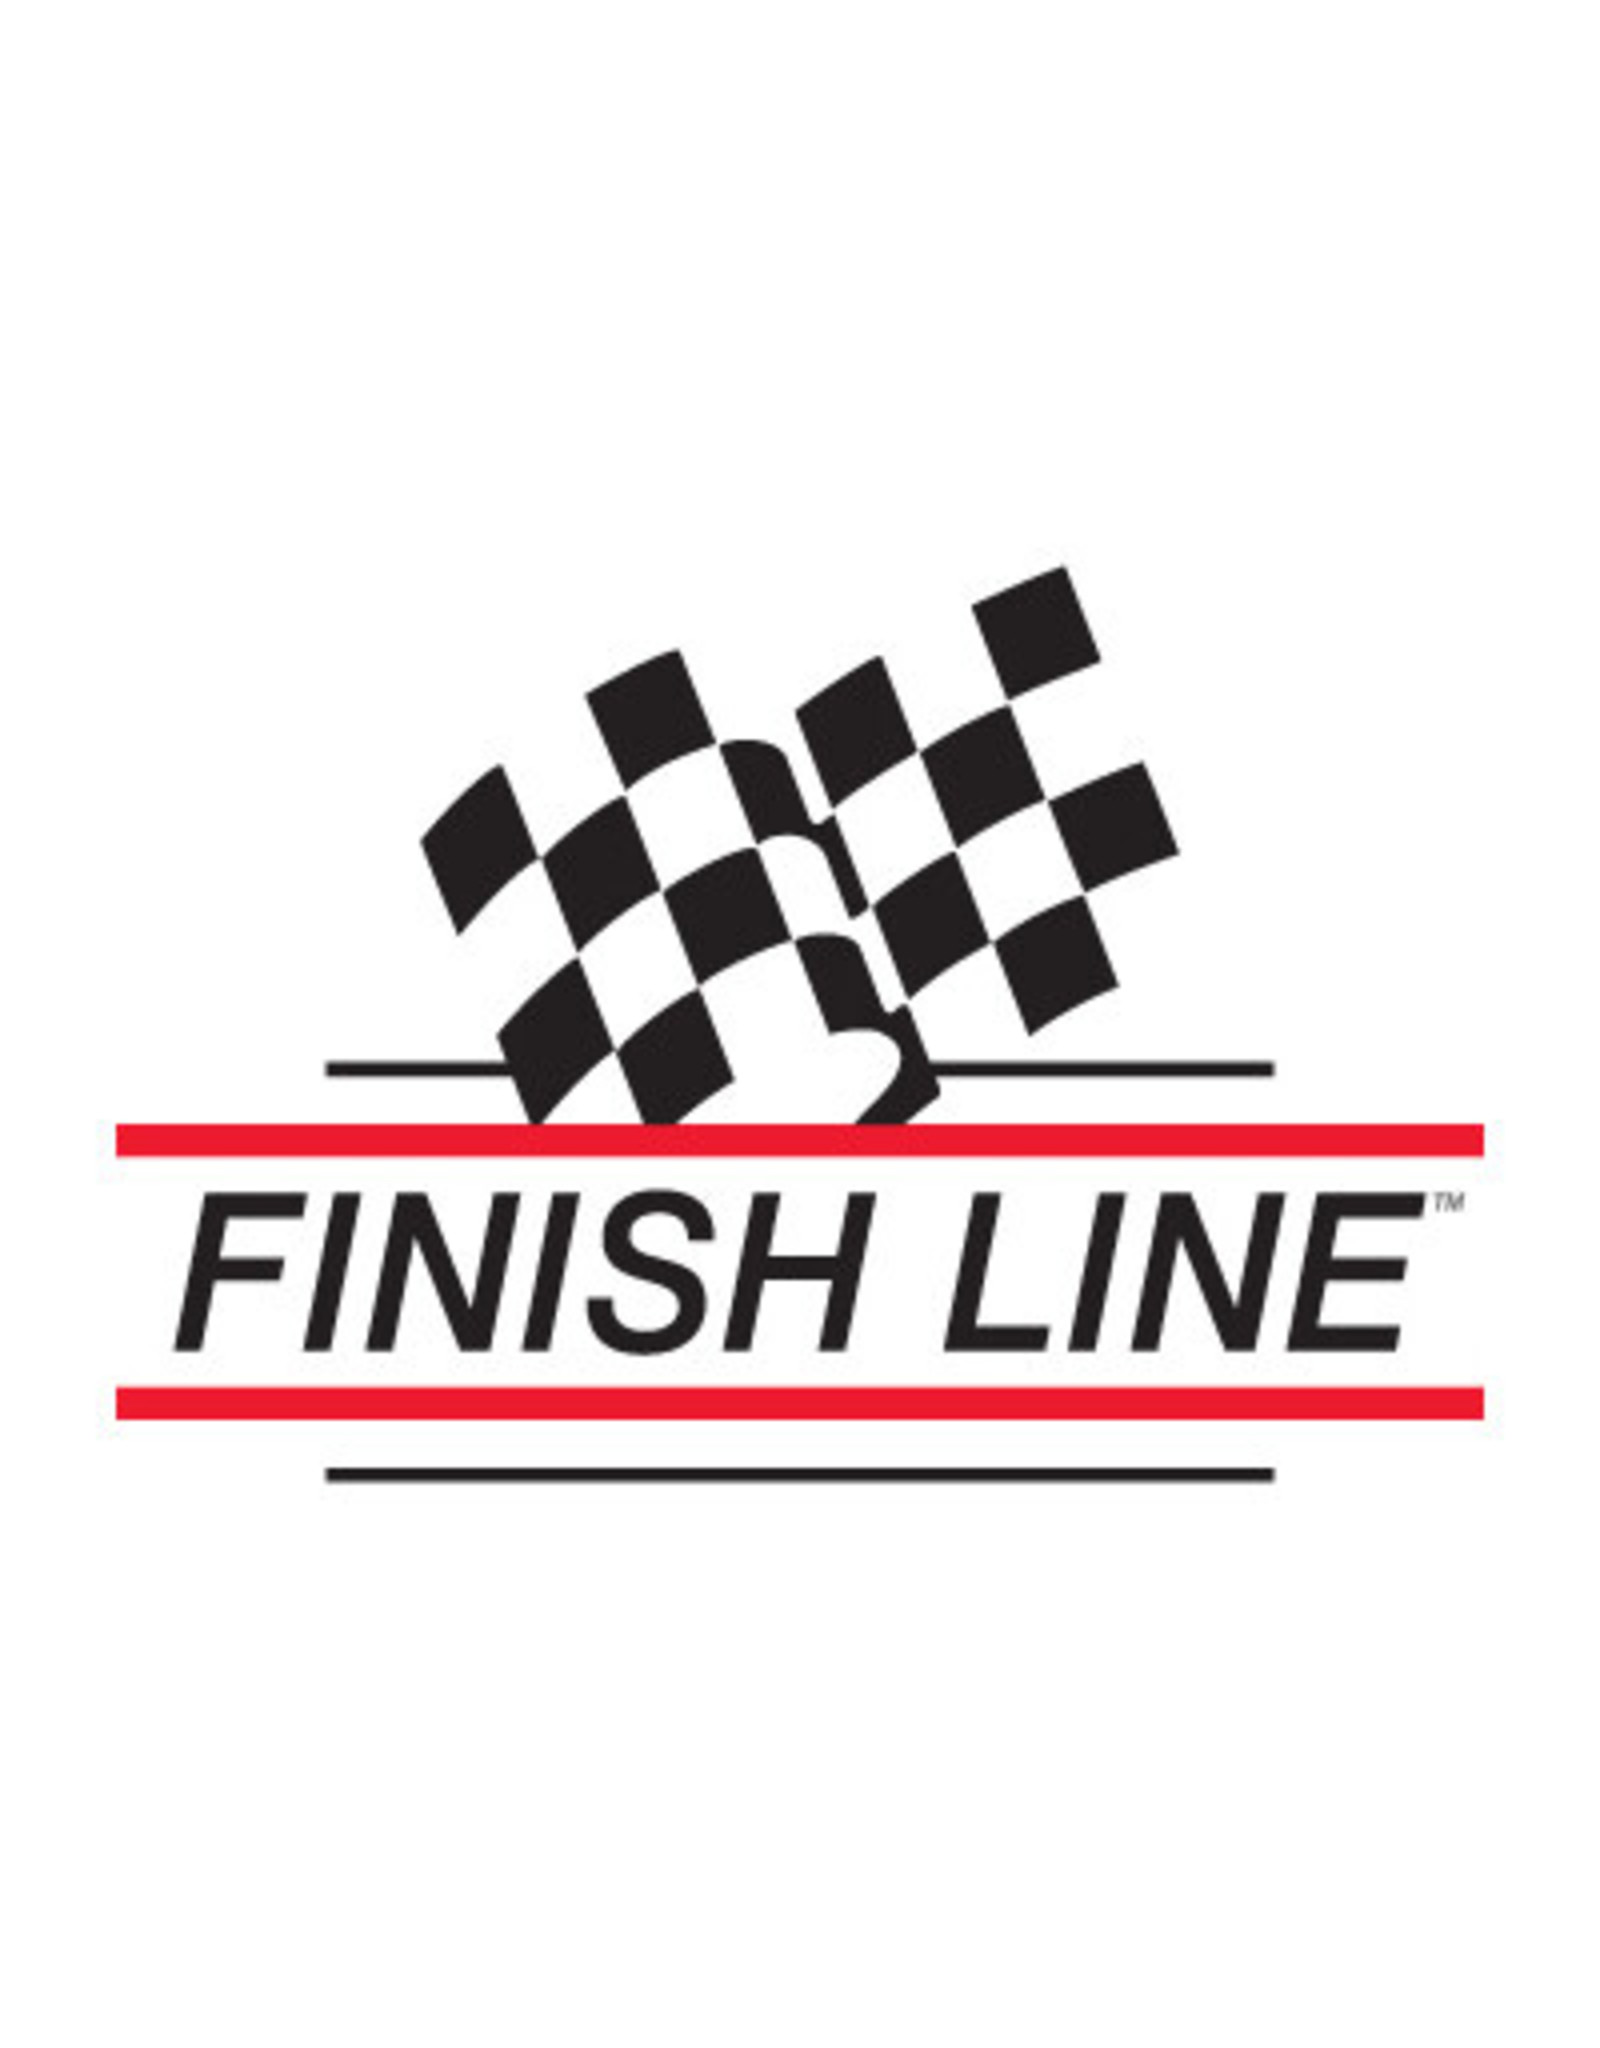 FINISH LINE Finish Line Premium Synt Grease - 3.5oz/100g -